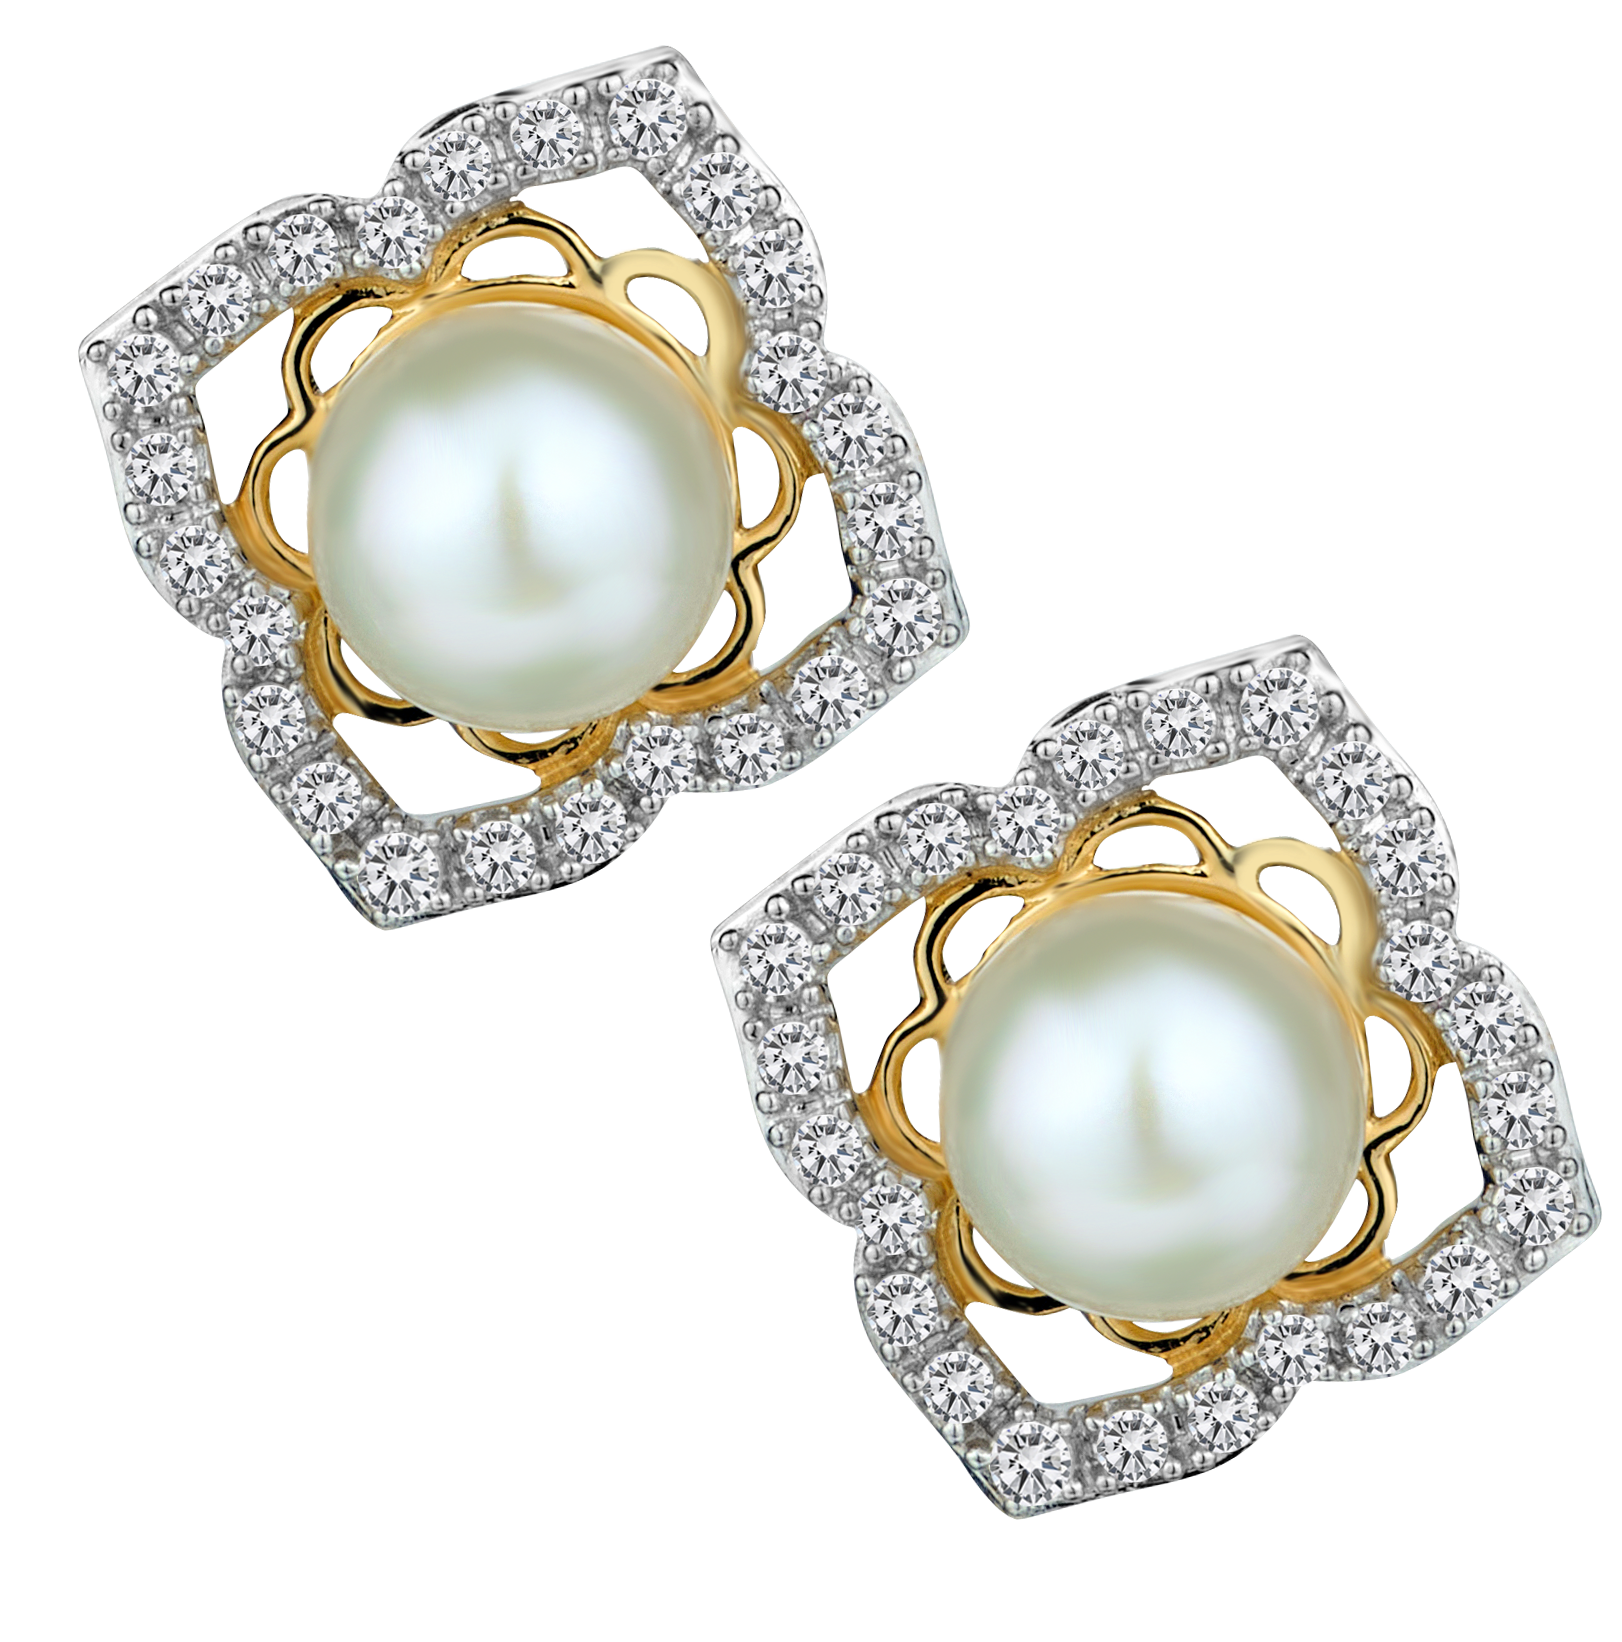 .25 Carat of Diamonds & Pearl Halo Stud Earrings, 10kt Yellow Gold.....................NOW